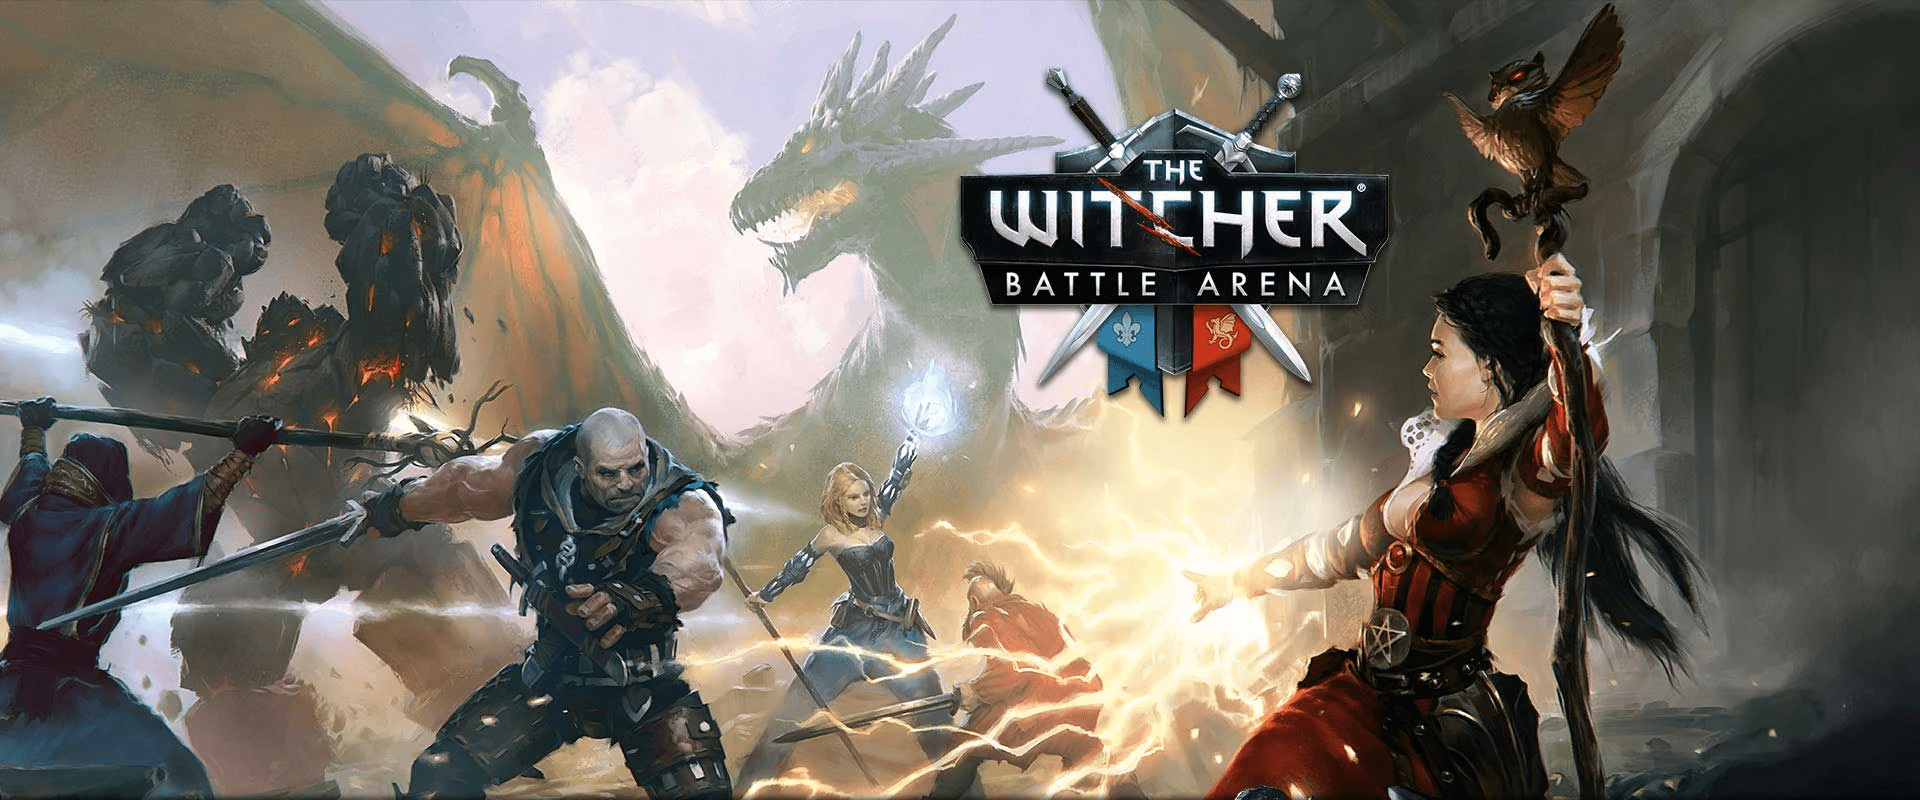 Coperta The Witcher Battle Arena